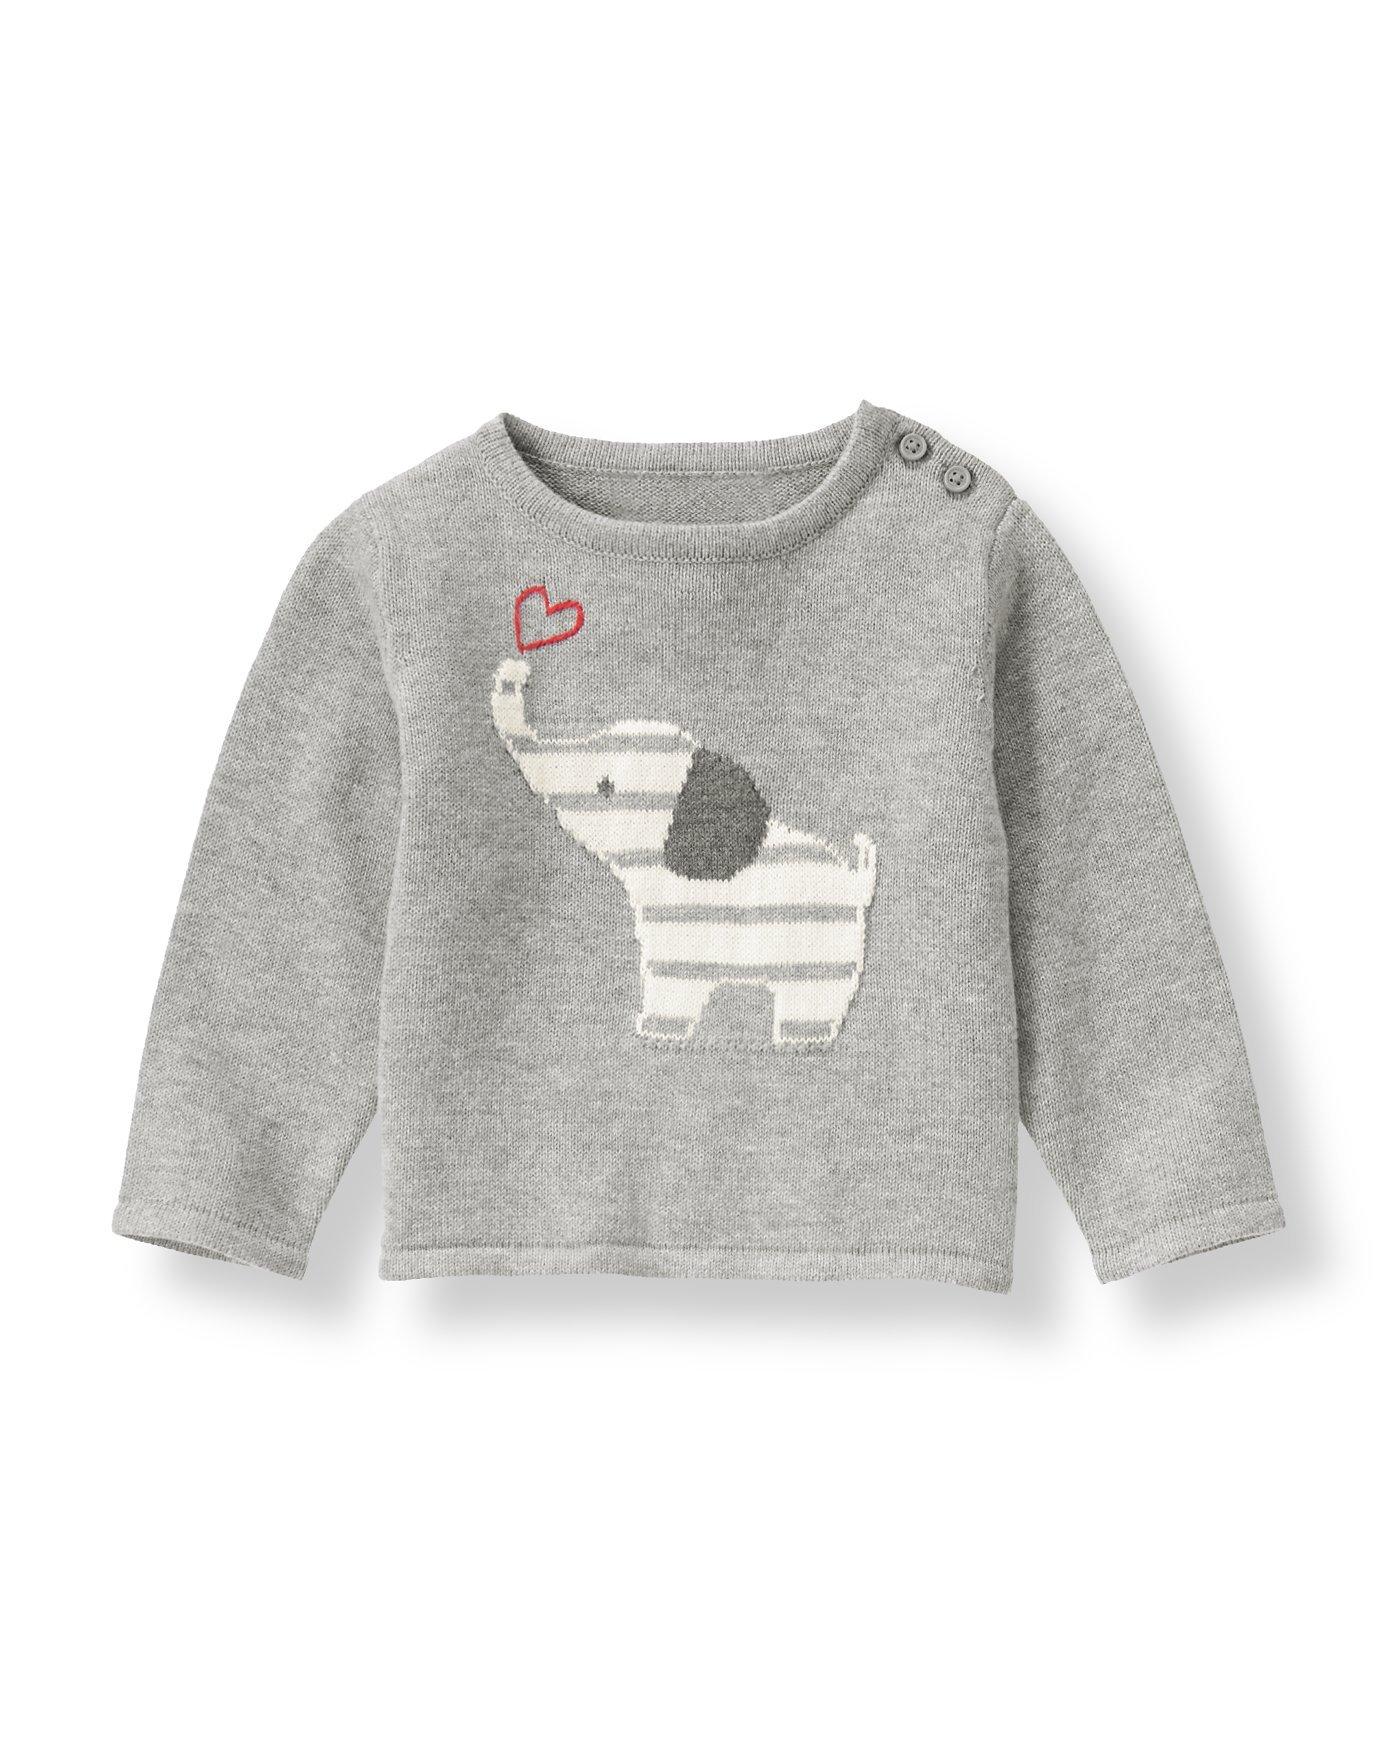 Elephant Sweater image number 0